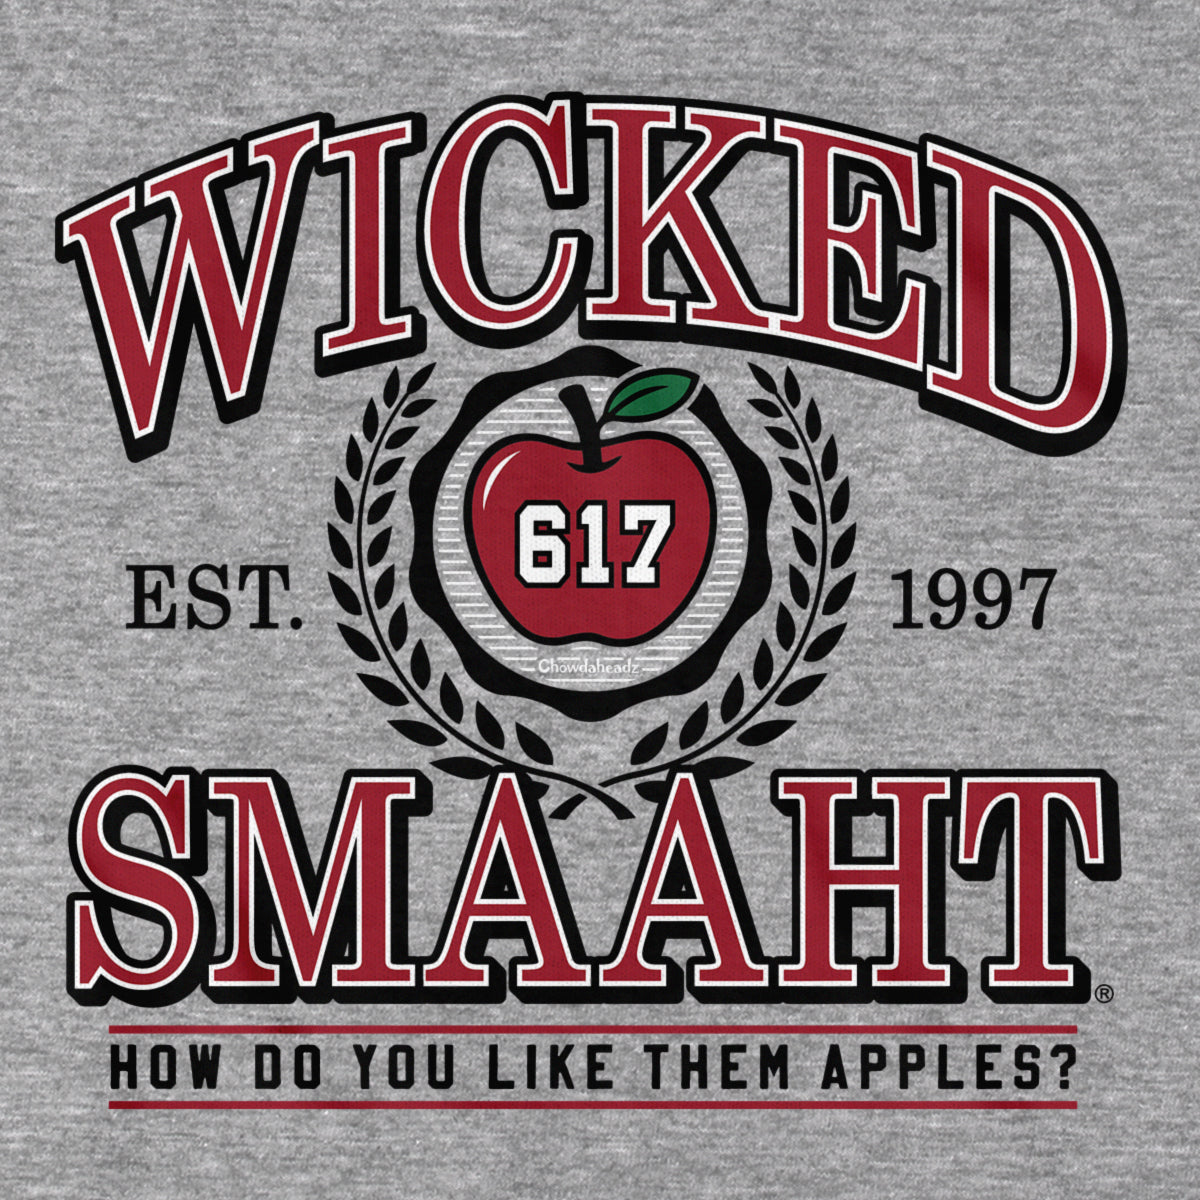 Wicked Smaaht Undergrad T-Shirt - Chowdaheadz